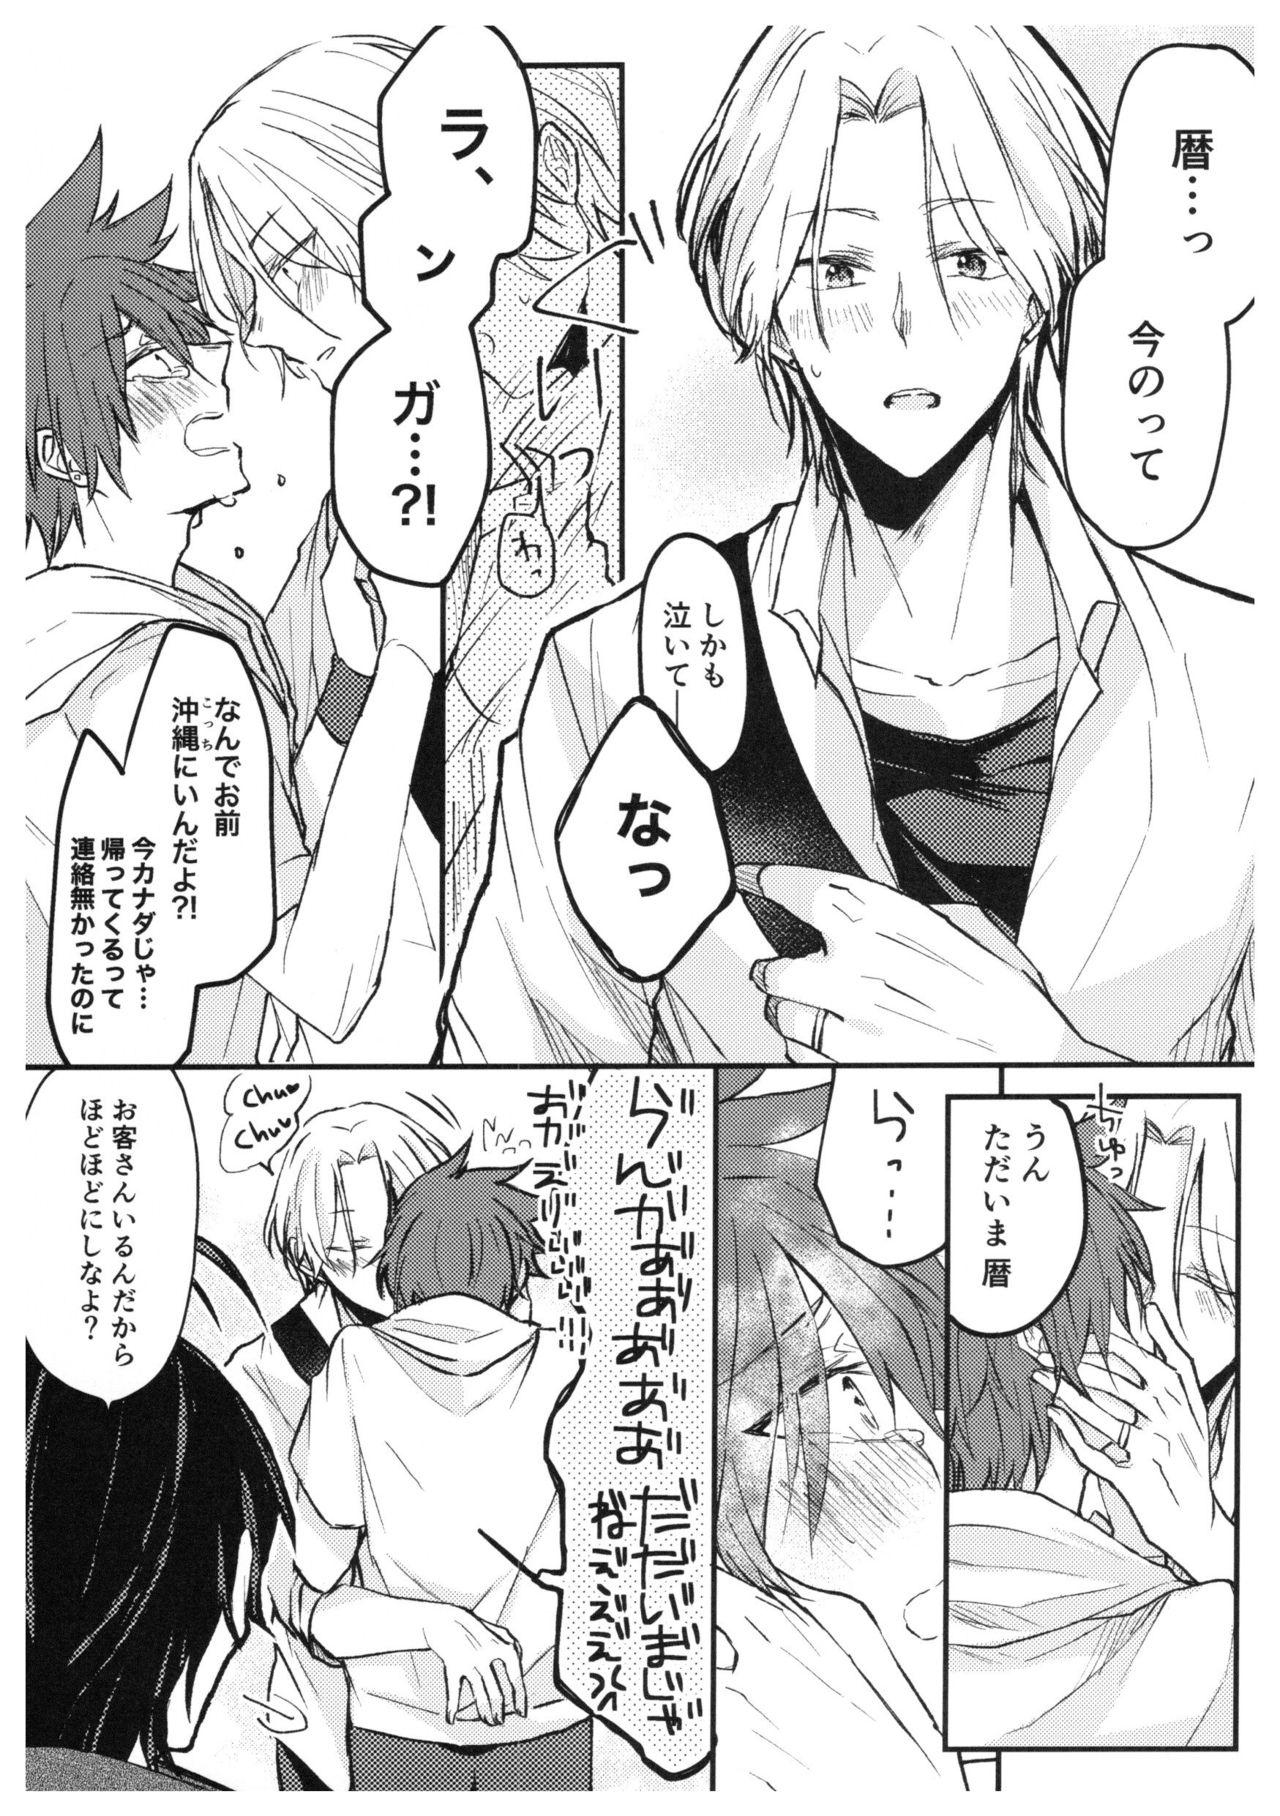 Chacal Ore-tachi no Saikou no Katachi - Sk8 the infinity Gay Bus - Page 8